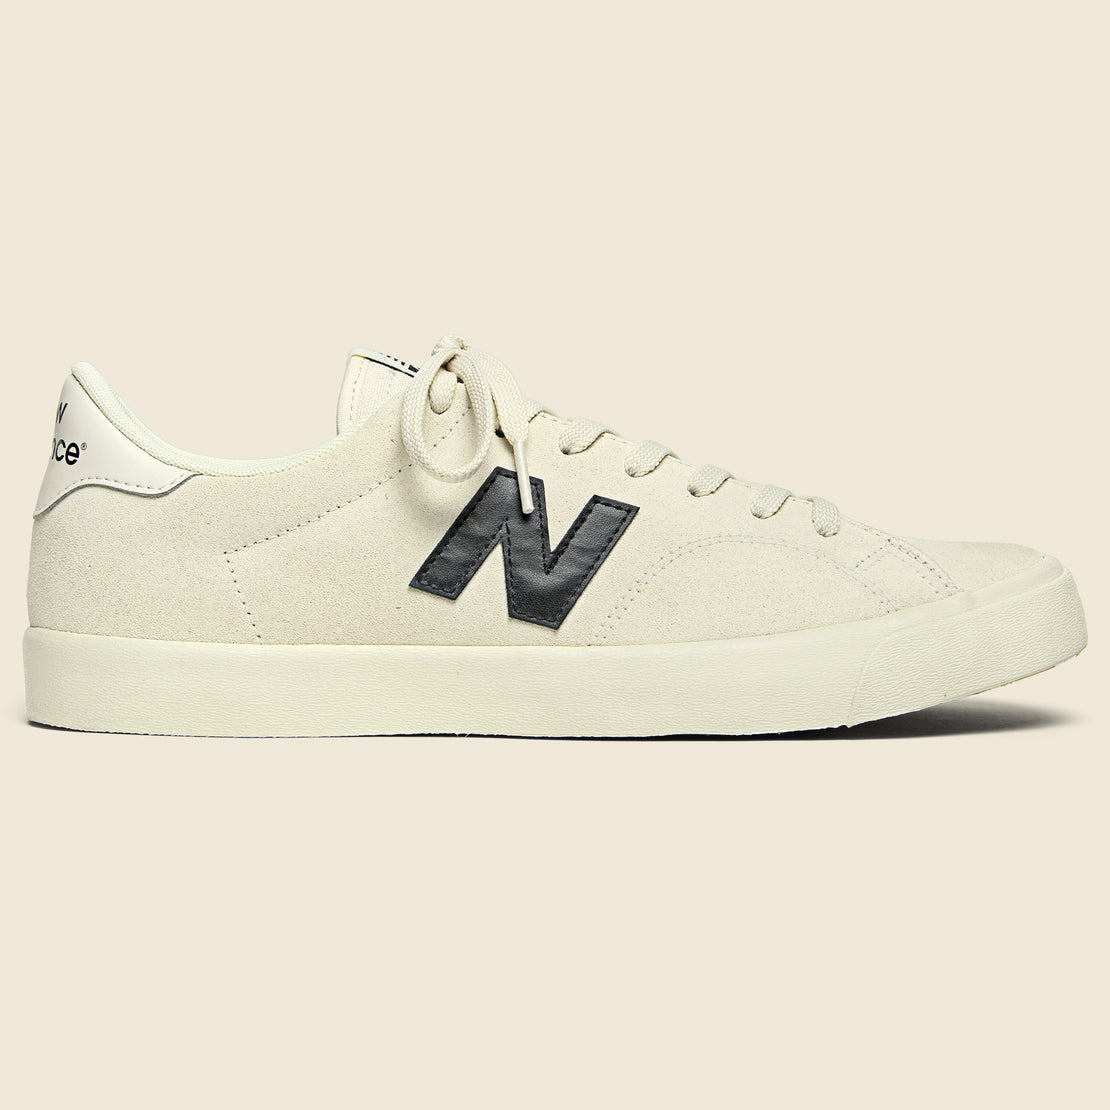 New Balance All Coast Sneaker - White/Black